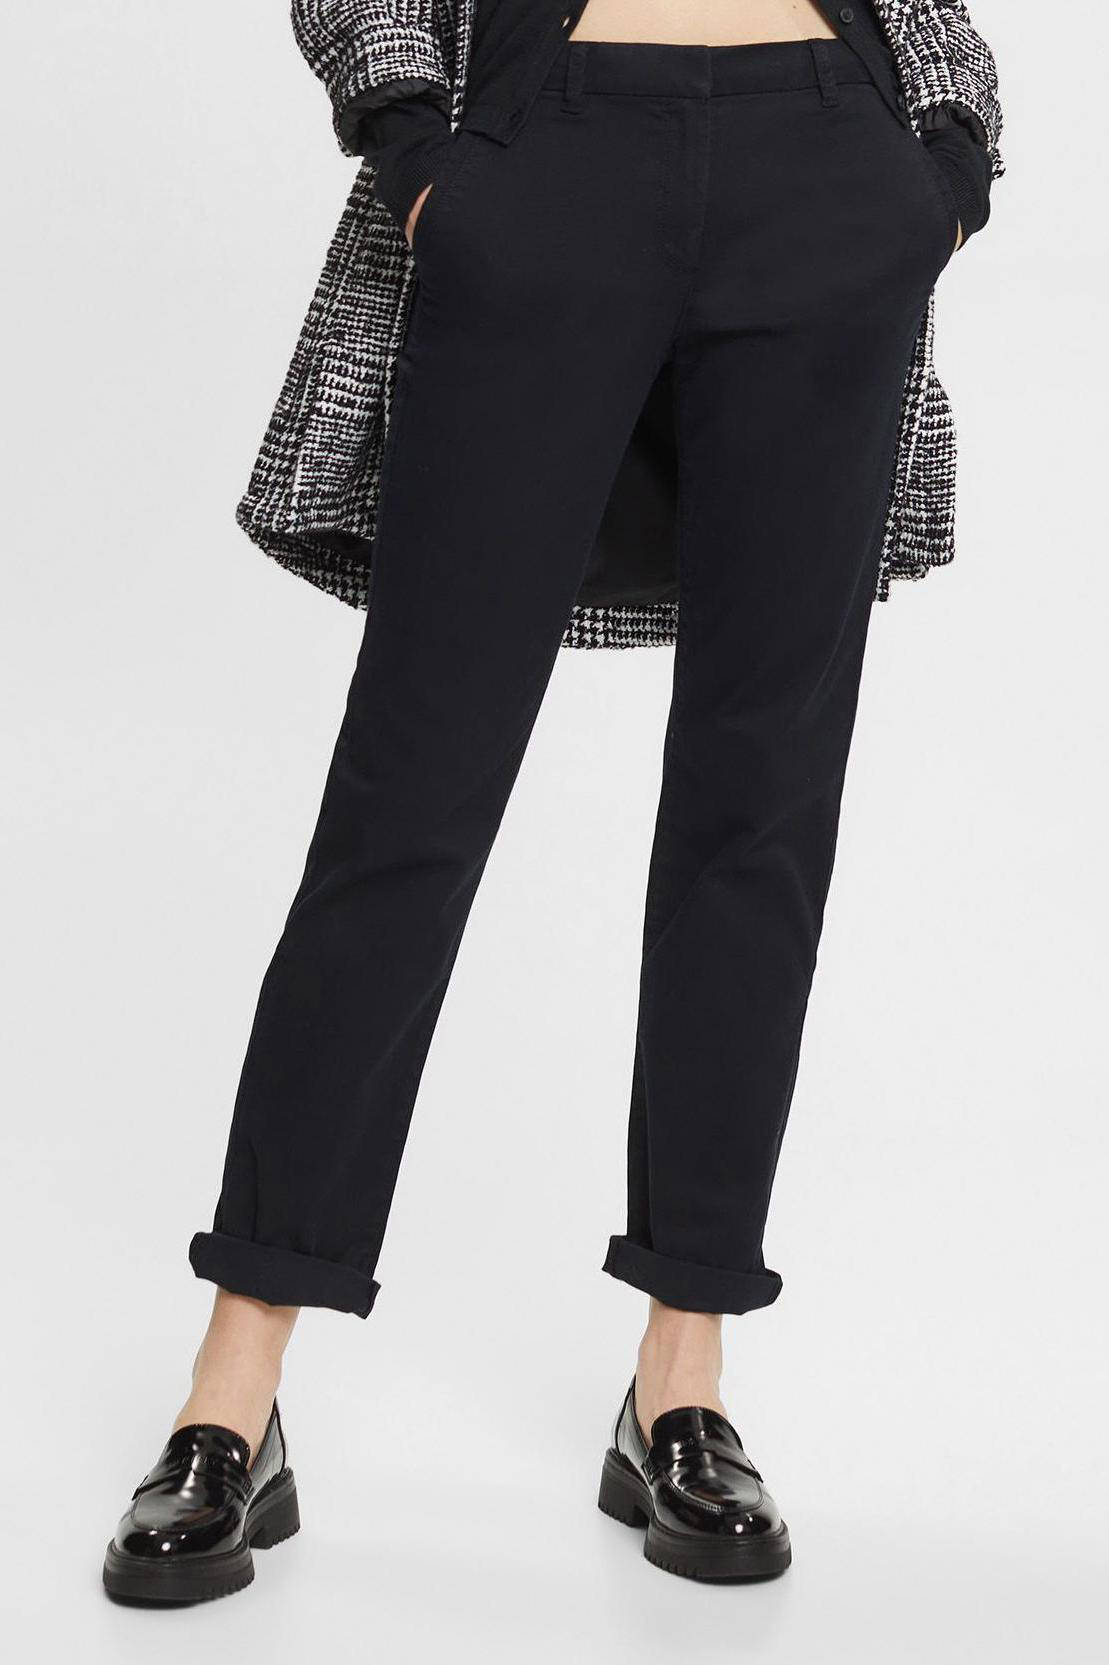 Mode Pakken Pantalons Esprit Pantalon zwart-wit gestreept patroon zakelijke stijl 